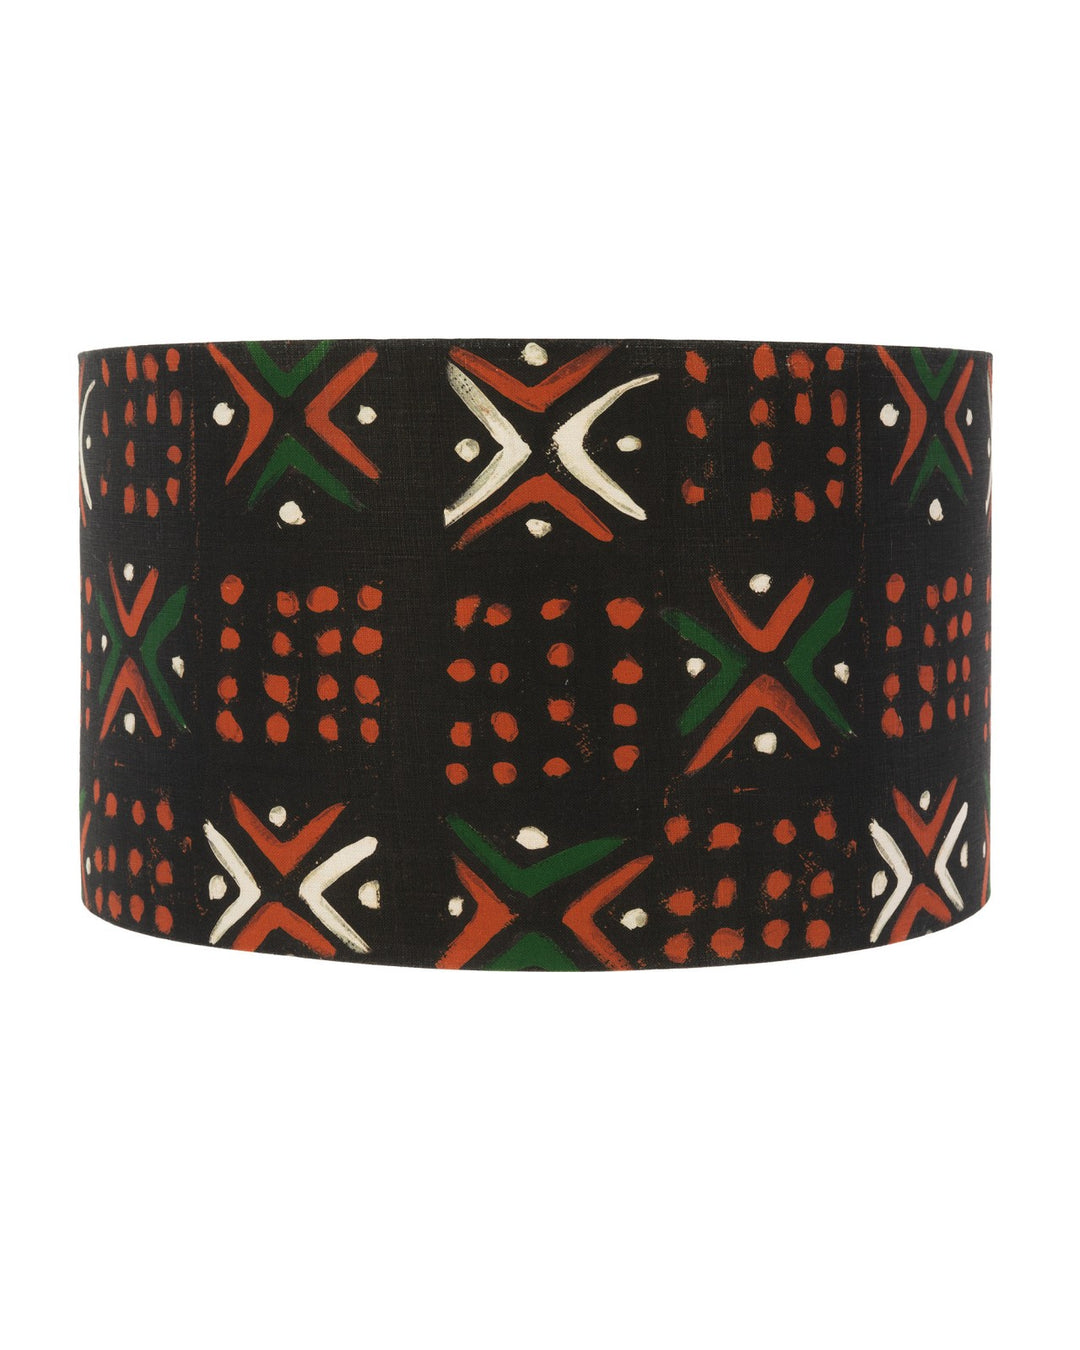 Mind-the-gap-Kimate-lampshade-Malian-print-block-pattern-hand-blocked-black-white-red-green-Aftrcan-Bogolan-traditional-print-fabric-pattern 